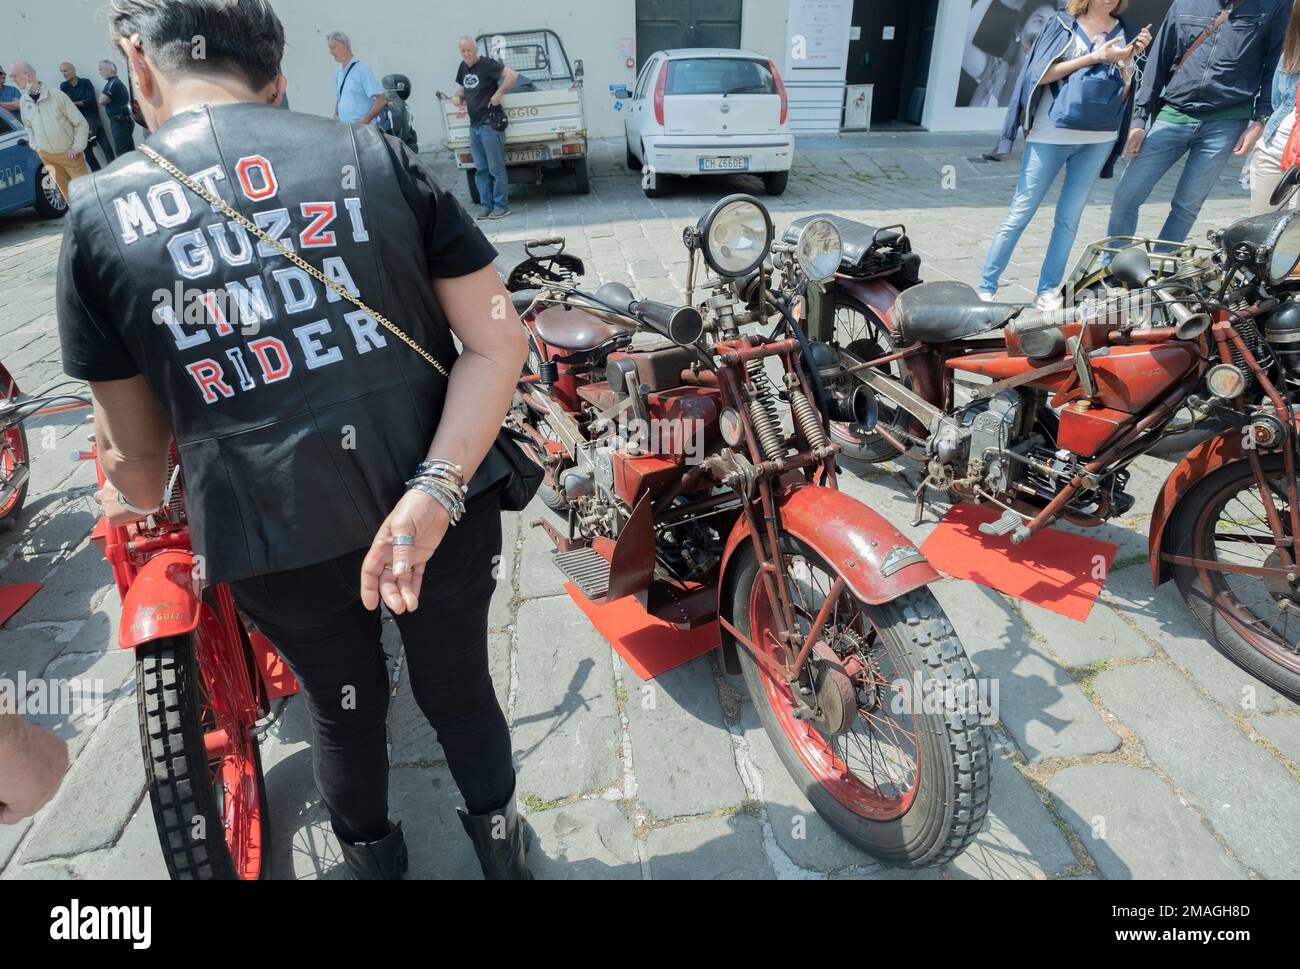 Mostra delle moto d'epoca Moto Guzzi, Genova, Italia Foto Stock